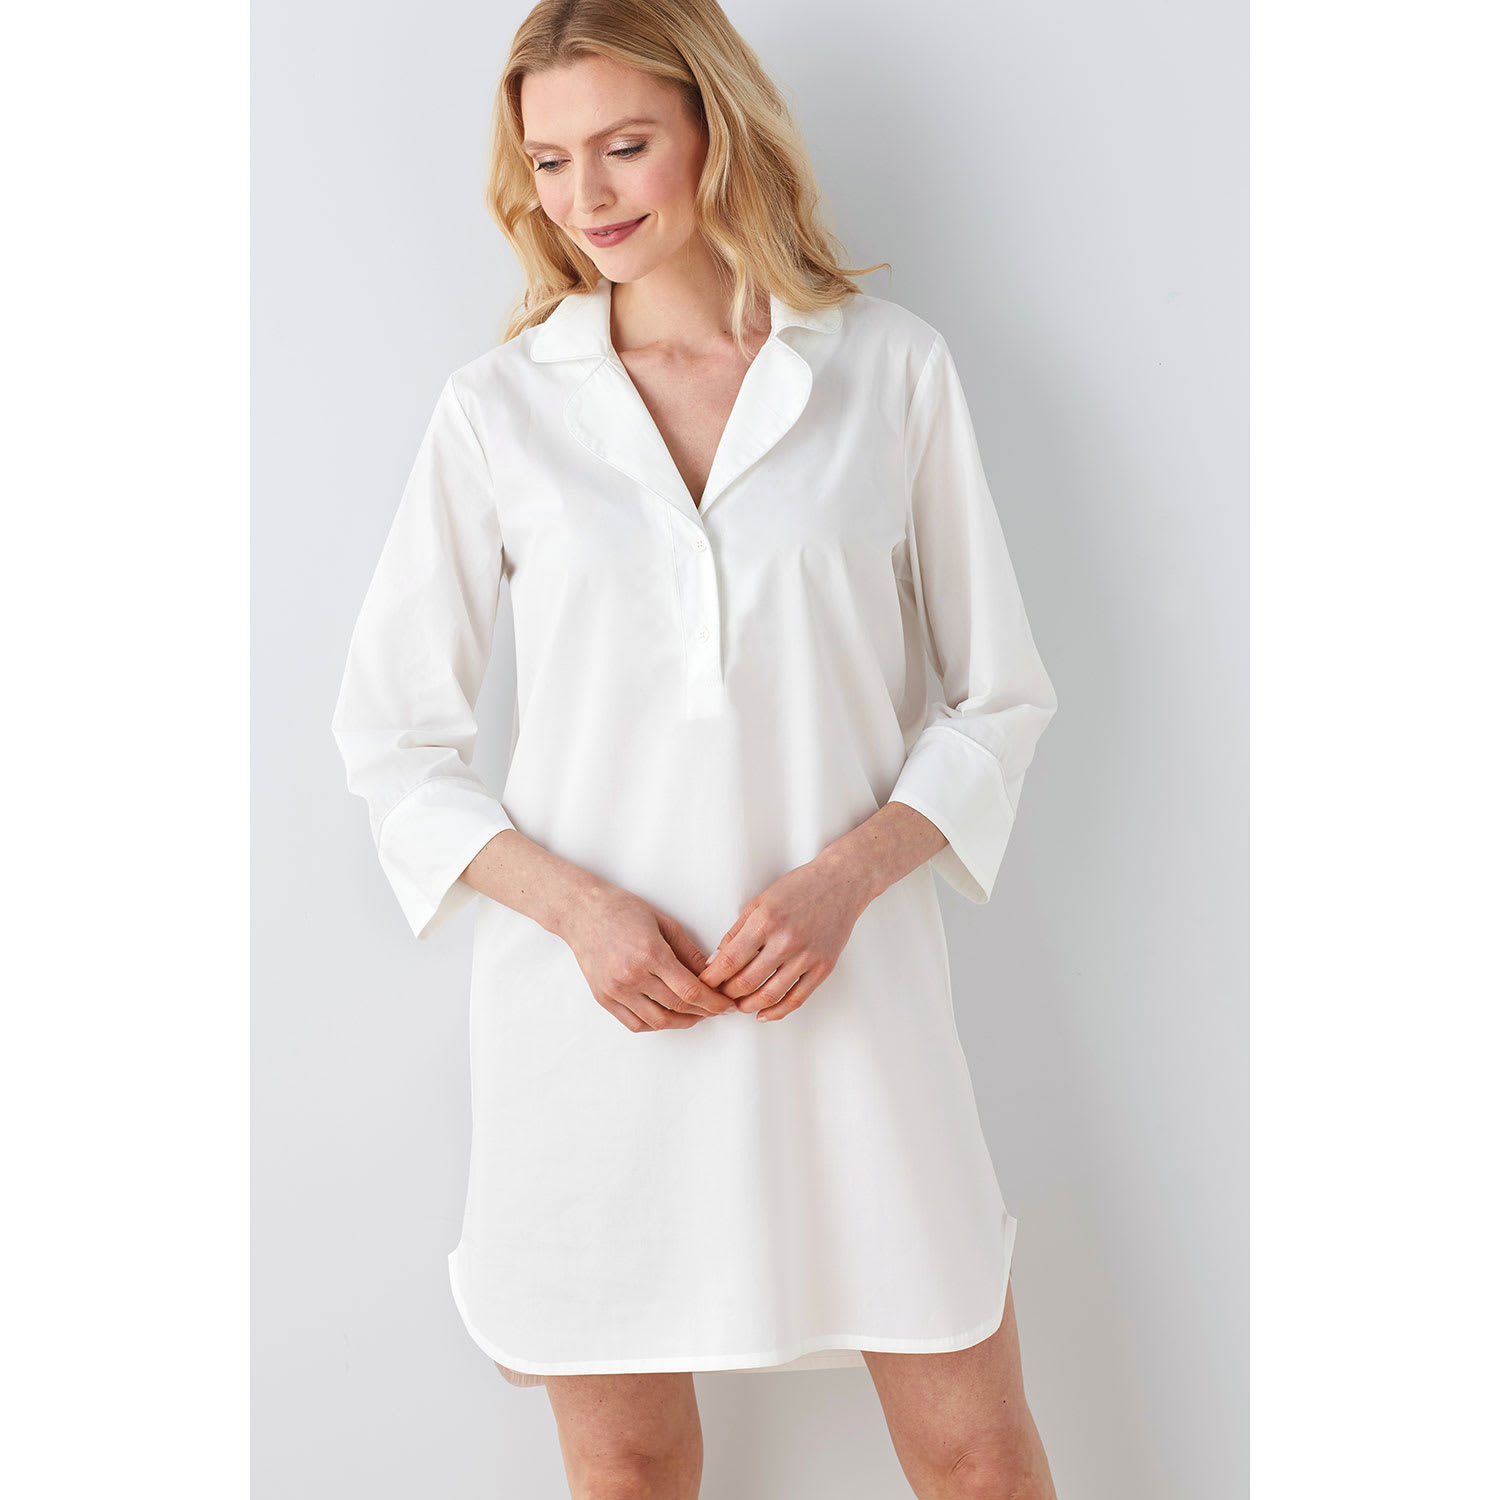 Solid Poplin Sleepwear Nightshirt - White